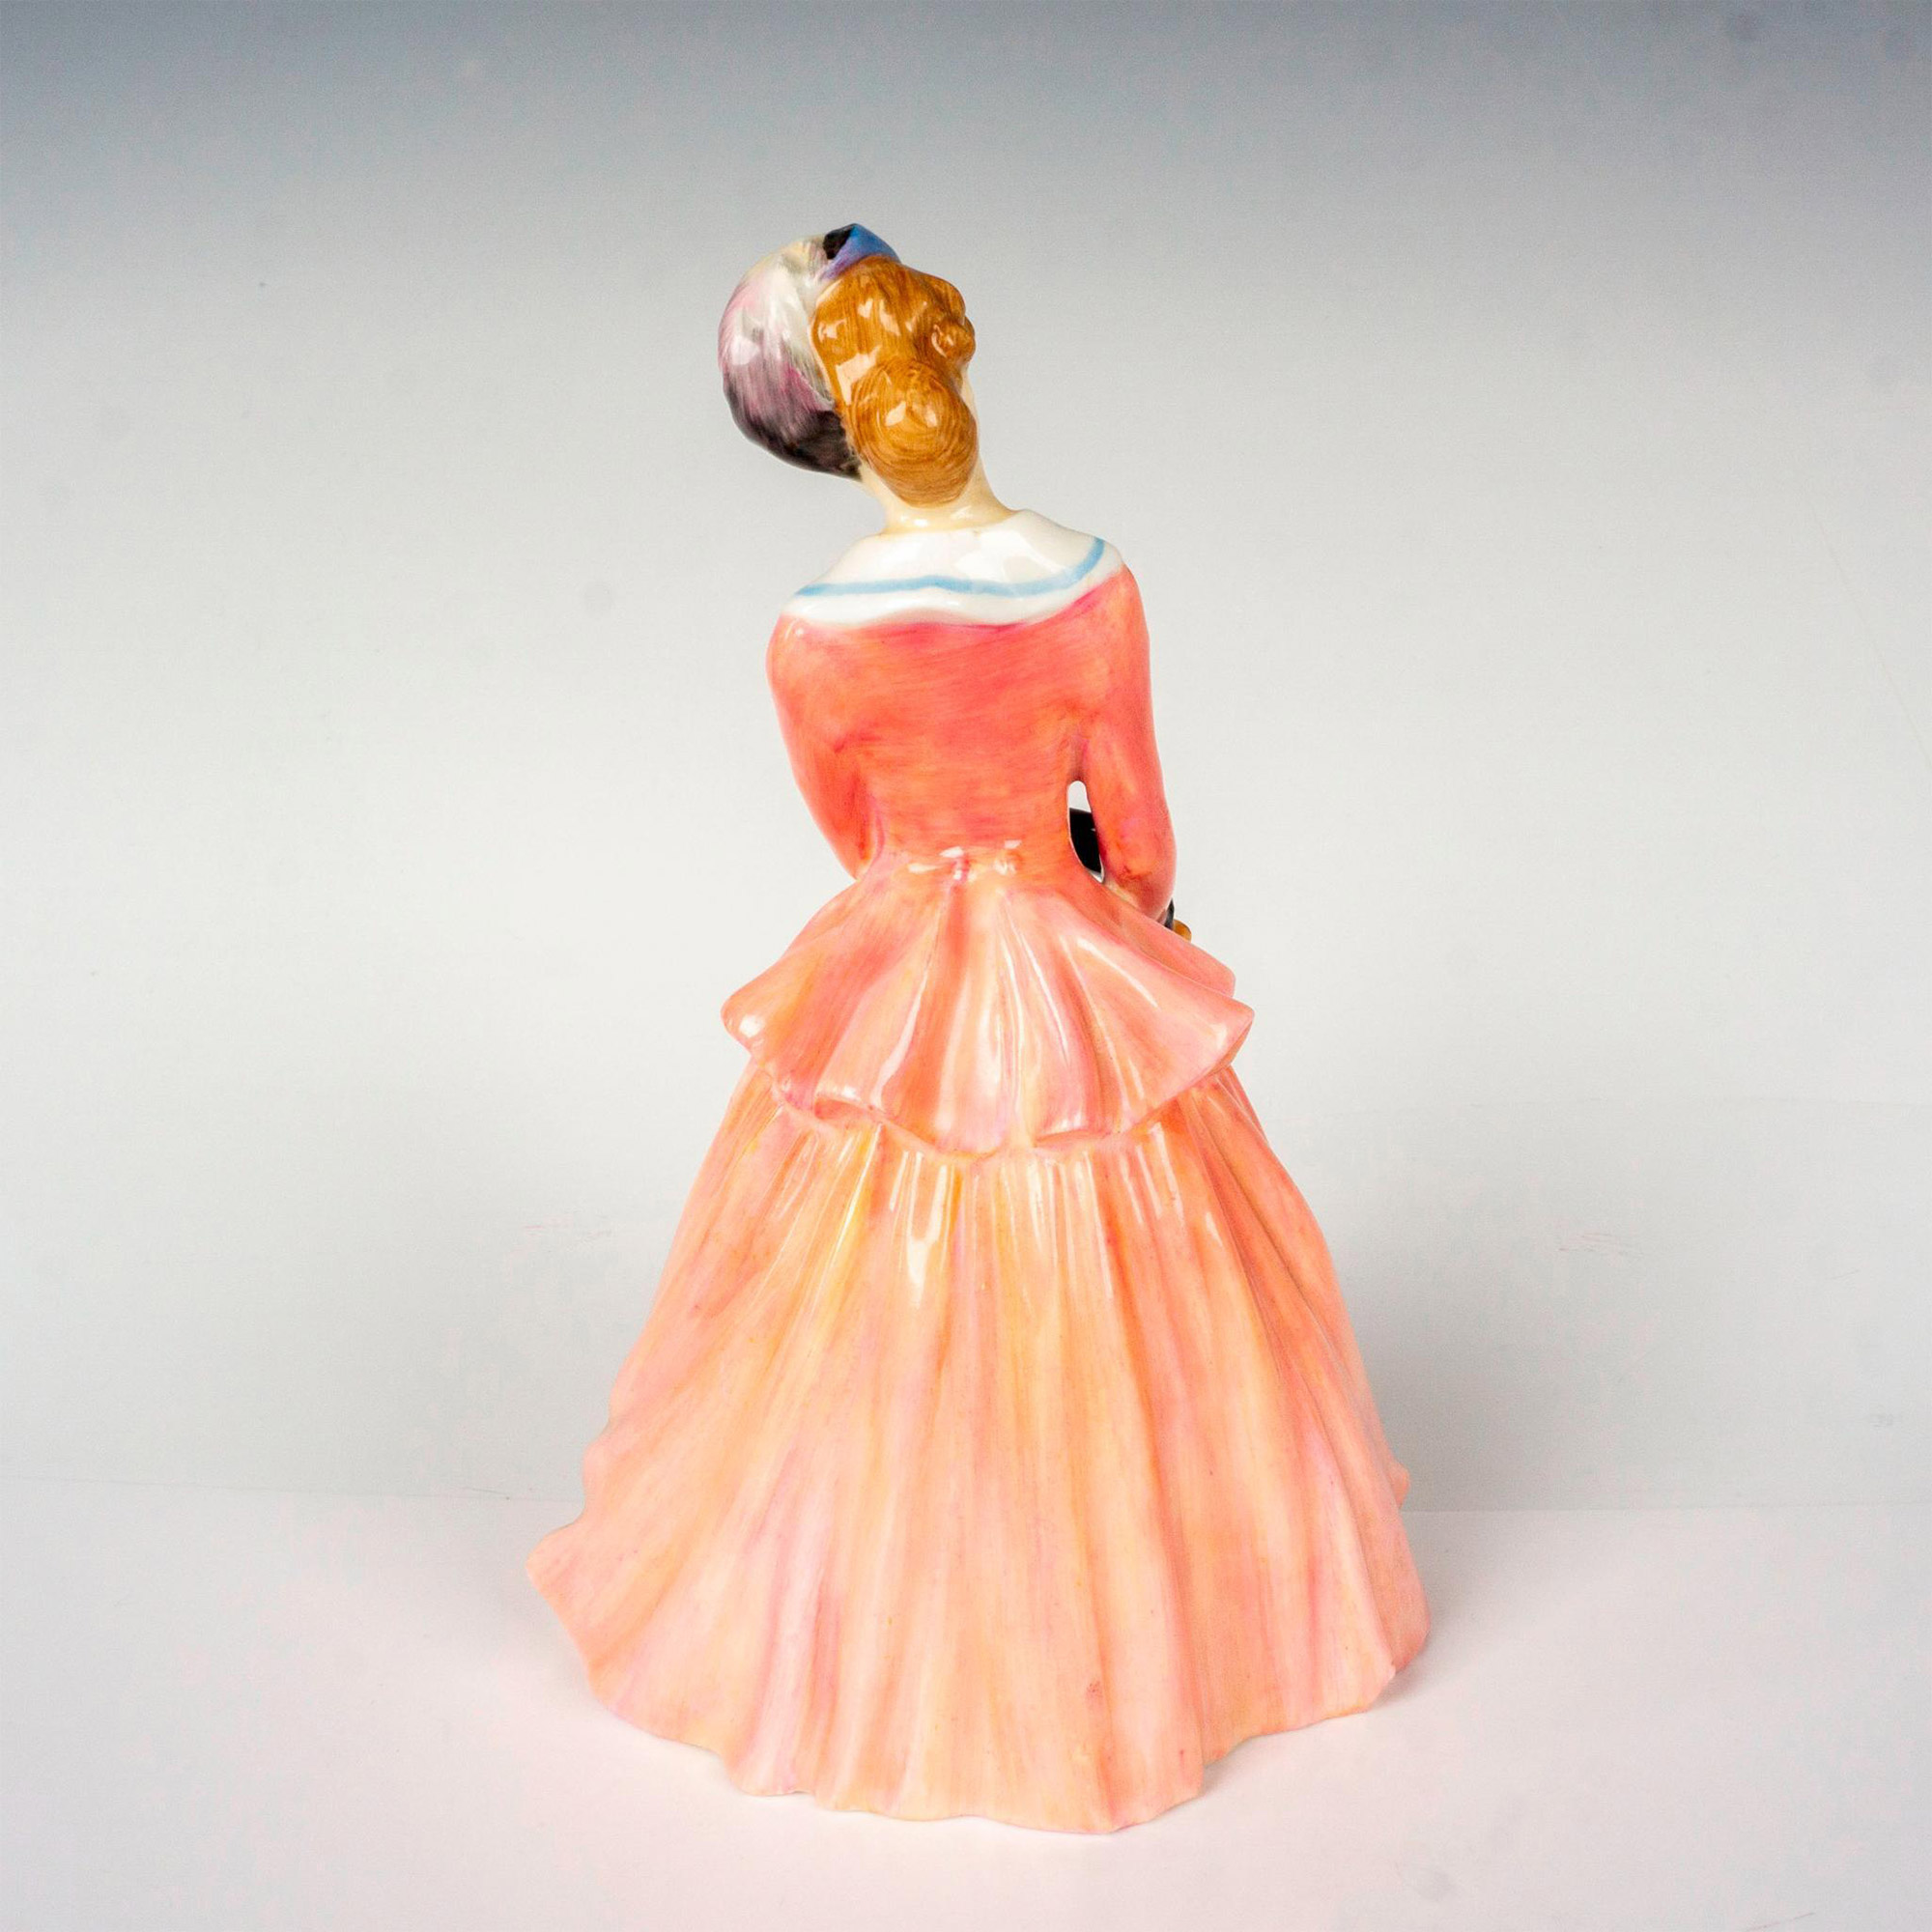 Milady HN1970 - Royal Doulton Figurine - Image 2 of 3